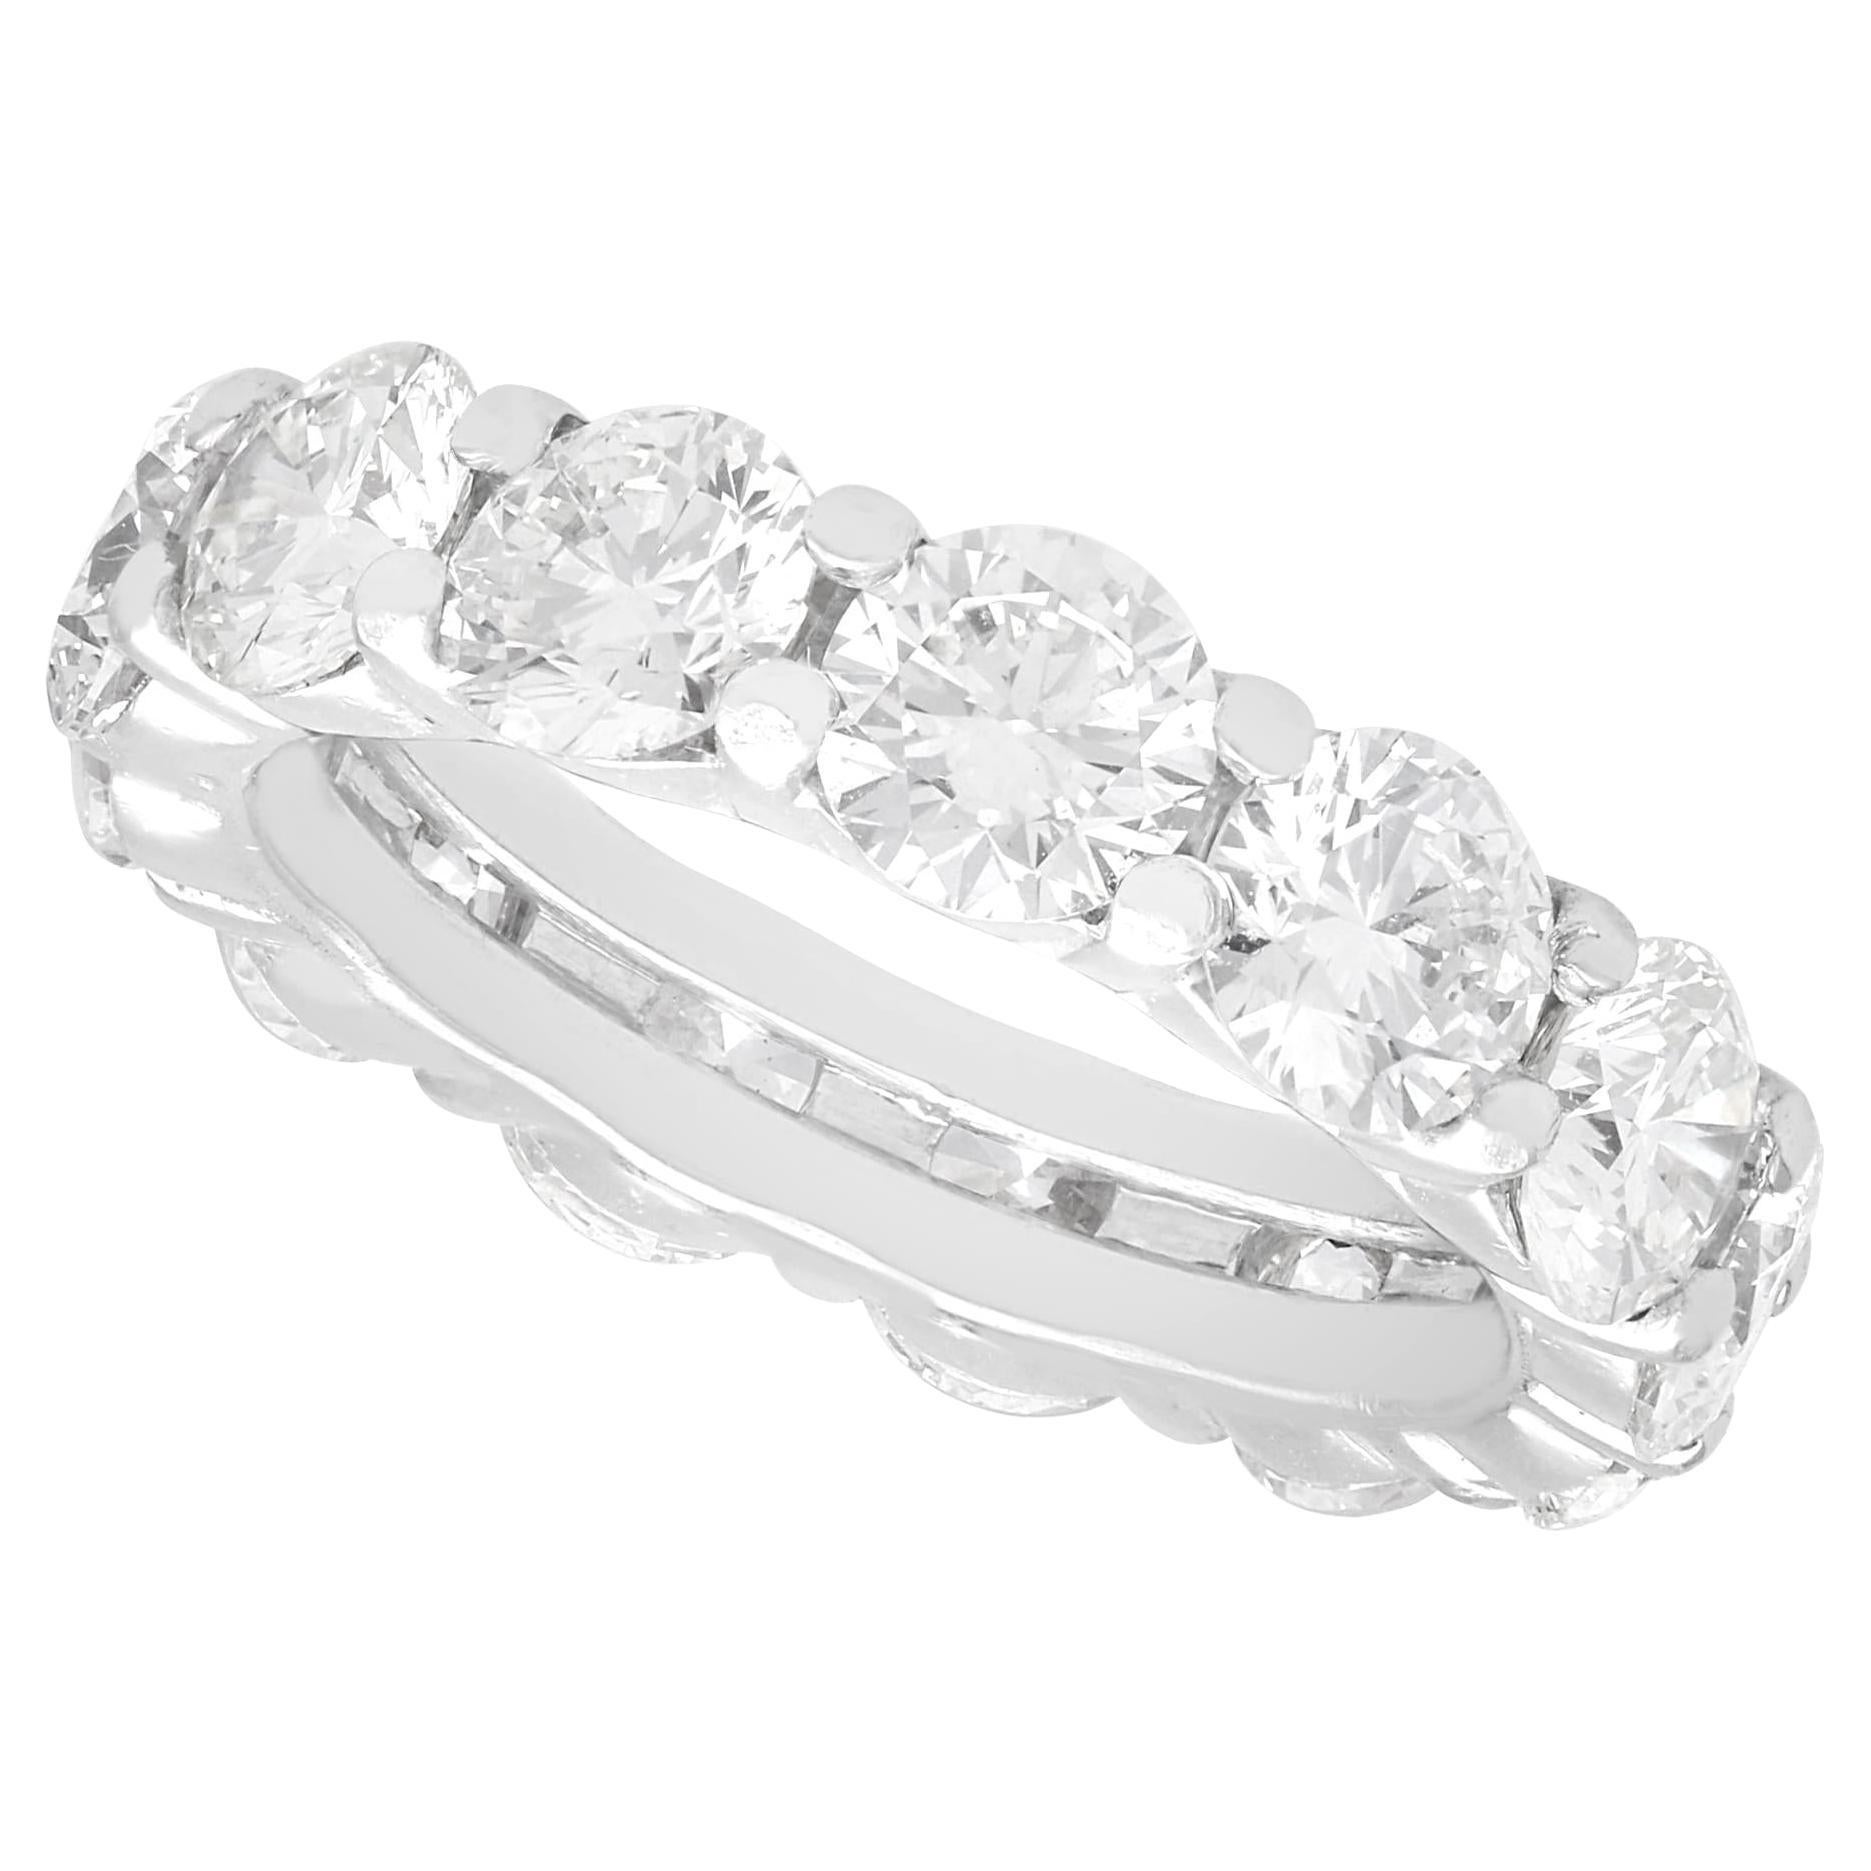 Vintage 5.46 Carat Diamond and White Gold Full Eternity / Bridal Ring